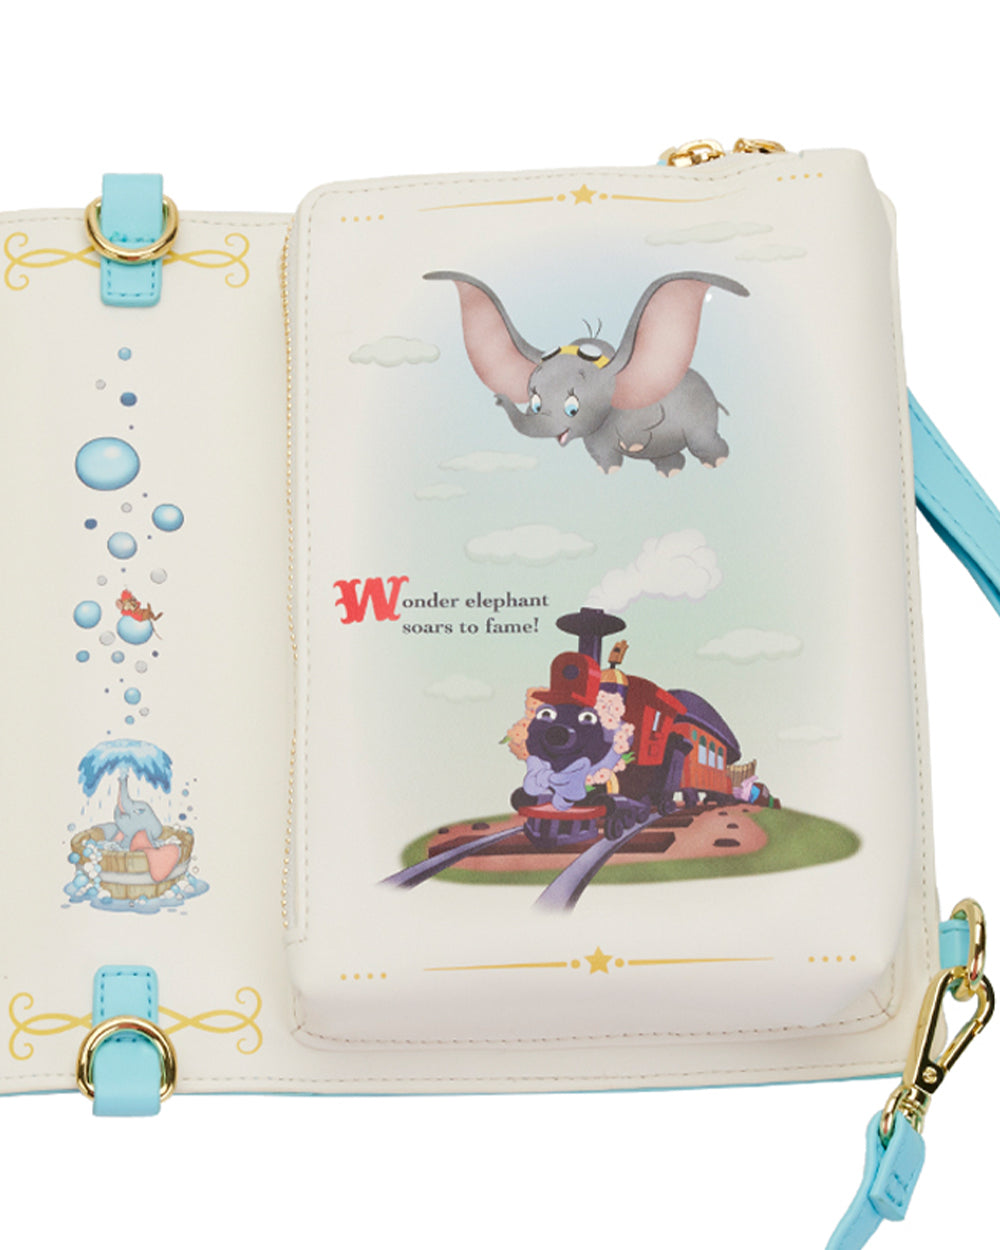 Loungefly - Disney Dumbo Book Convertible Crossbody Backpack Bag